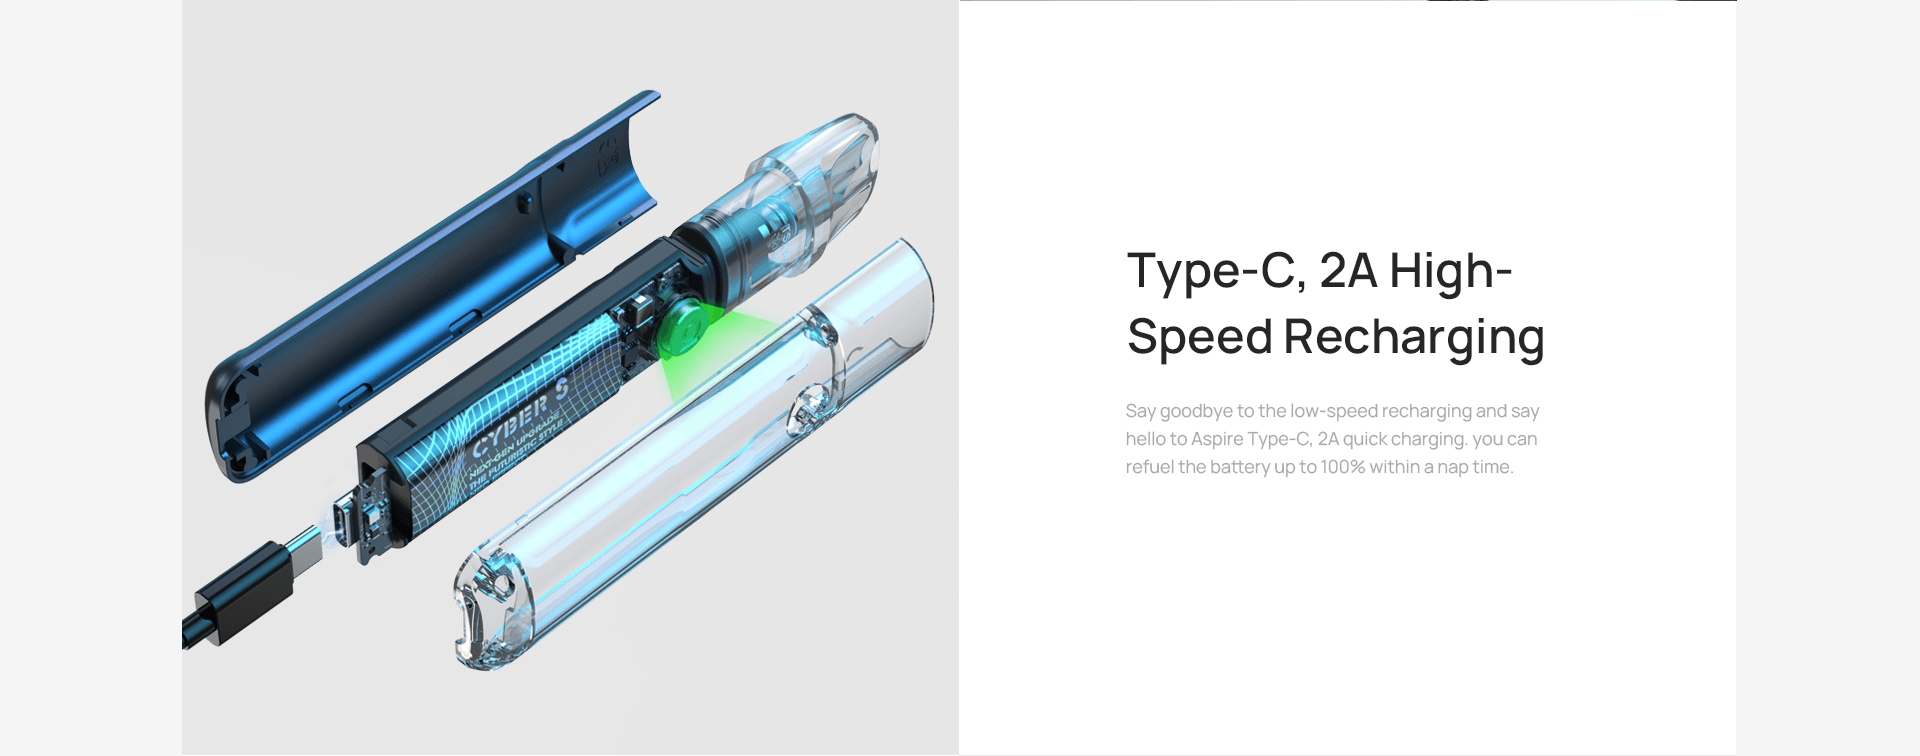 Aspire Cyber S | Type-C, 2A High Speed Recharging